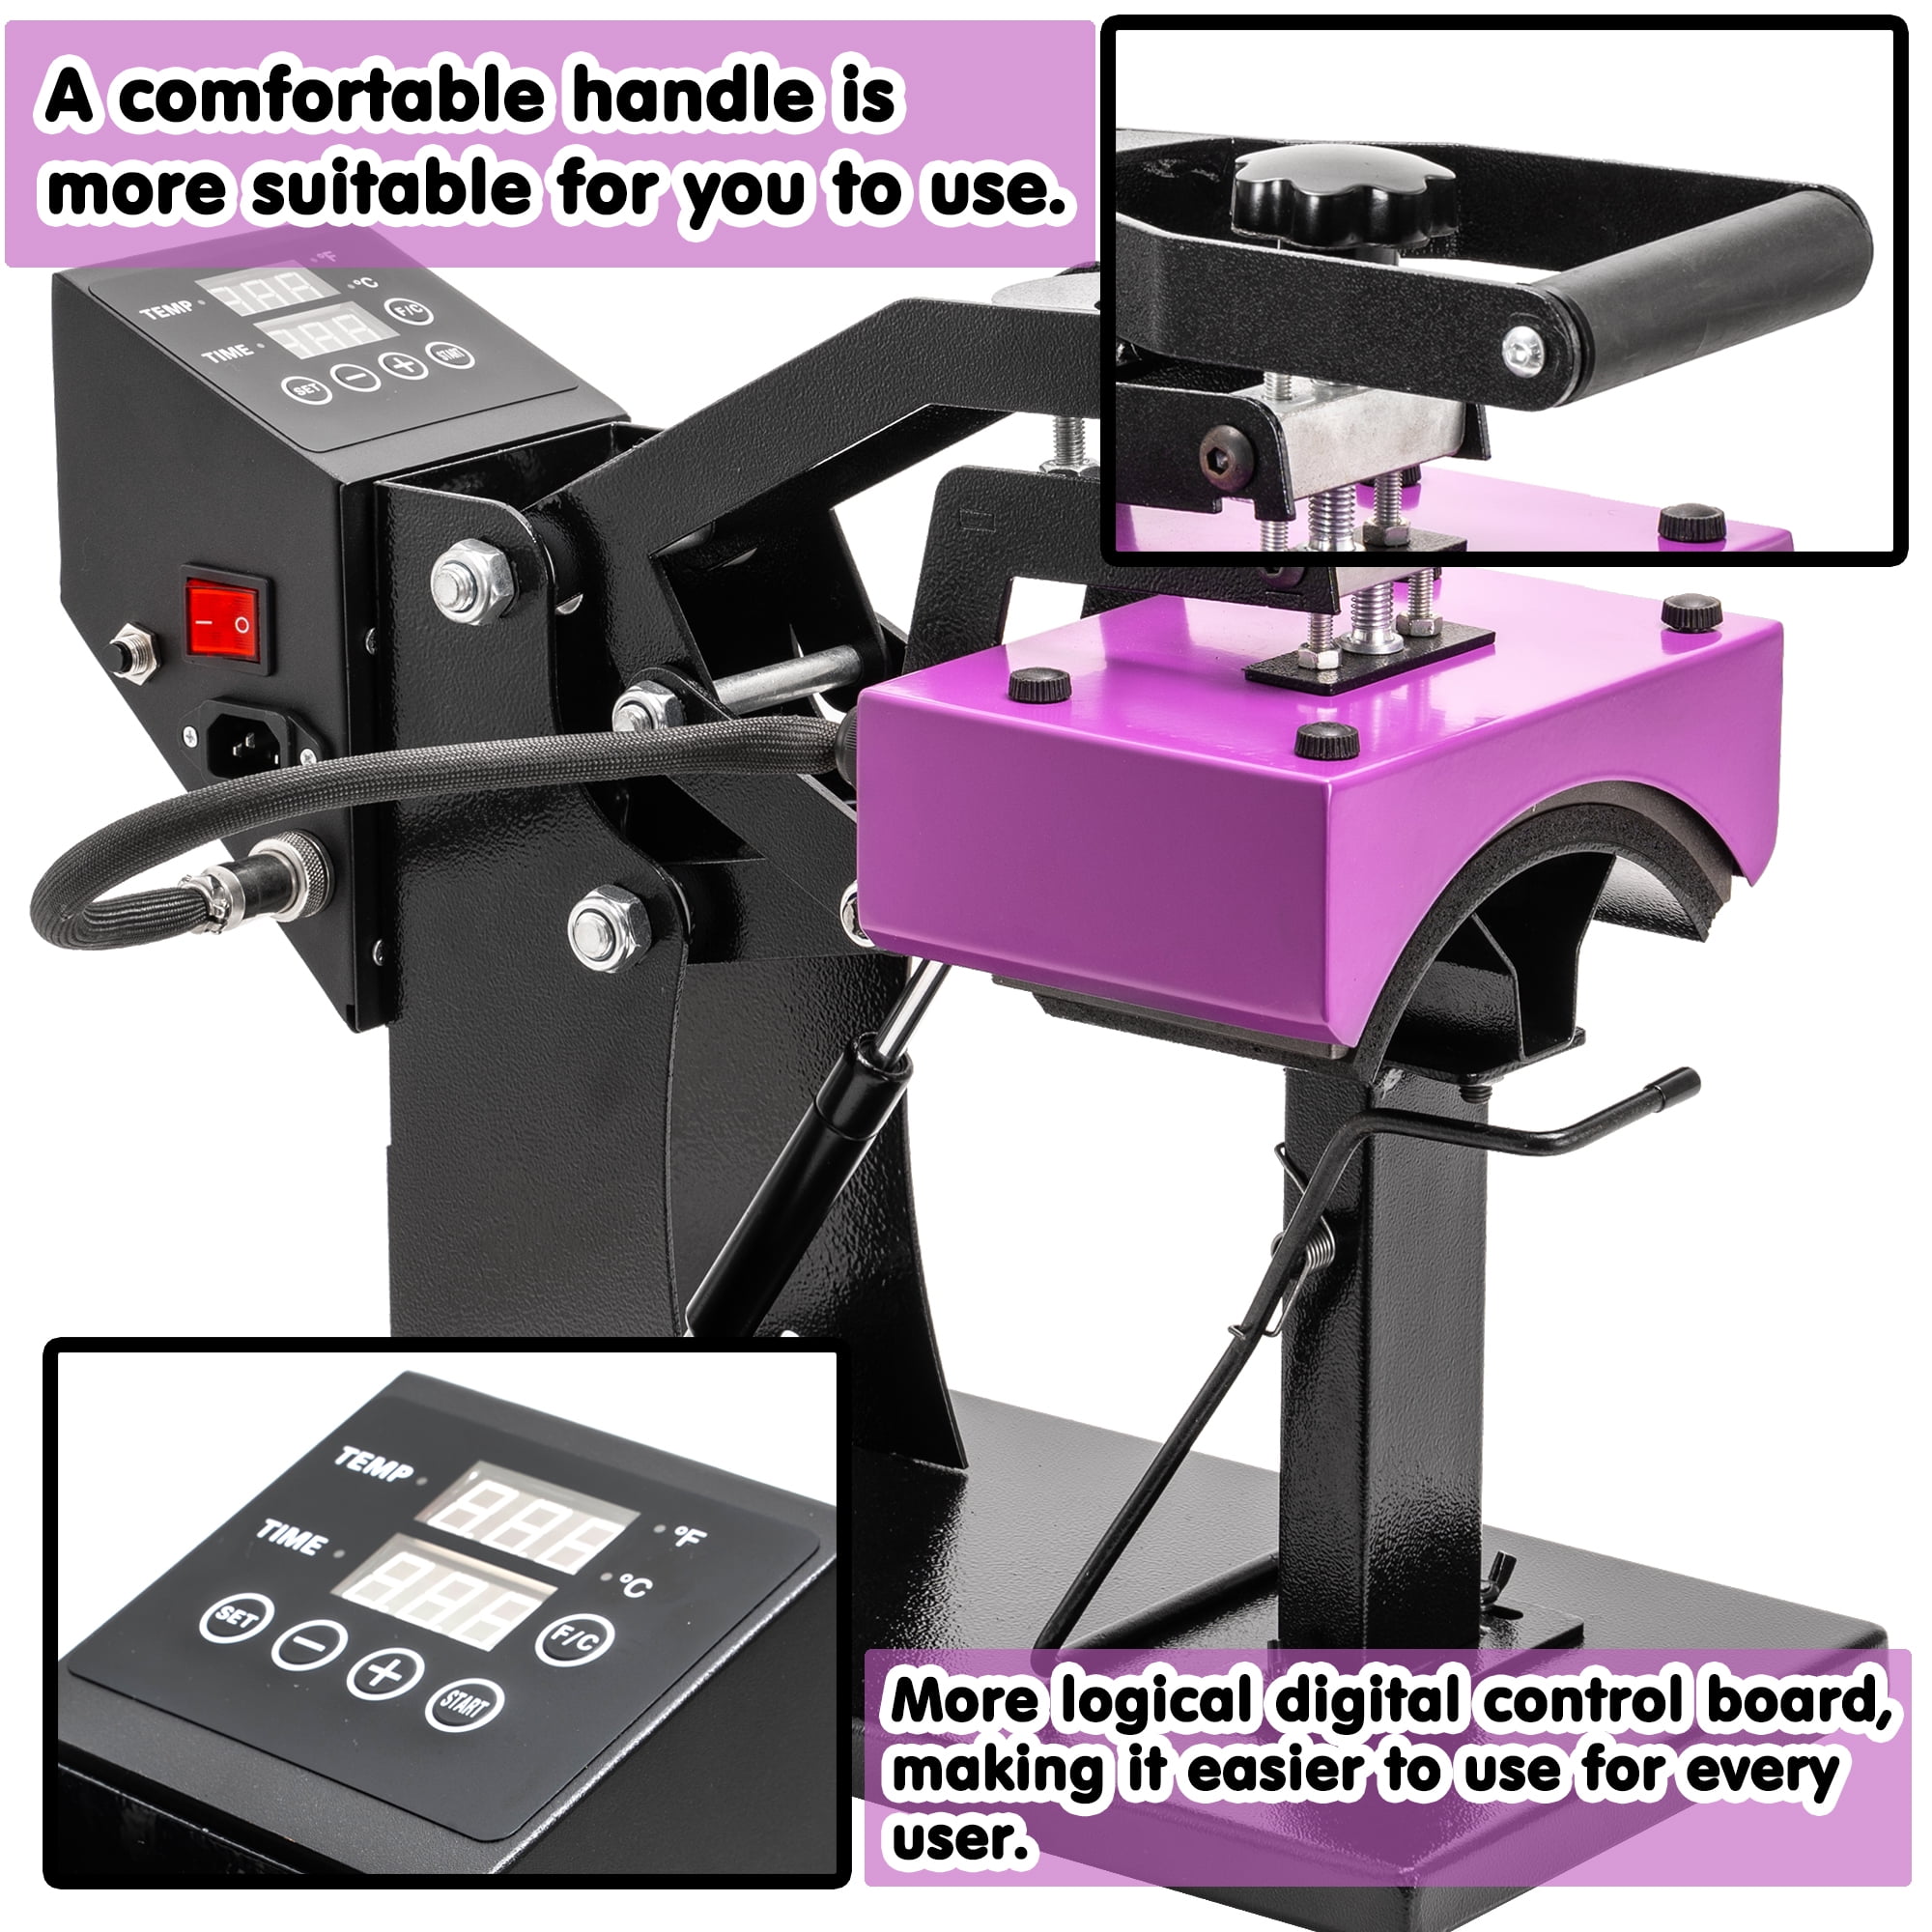 WELBEST Heat Press Machine 15x15, Purple